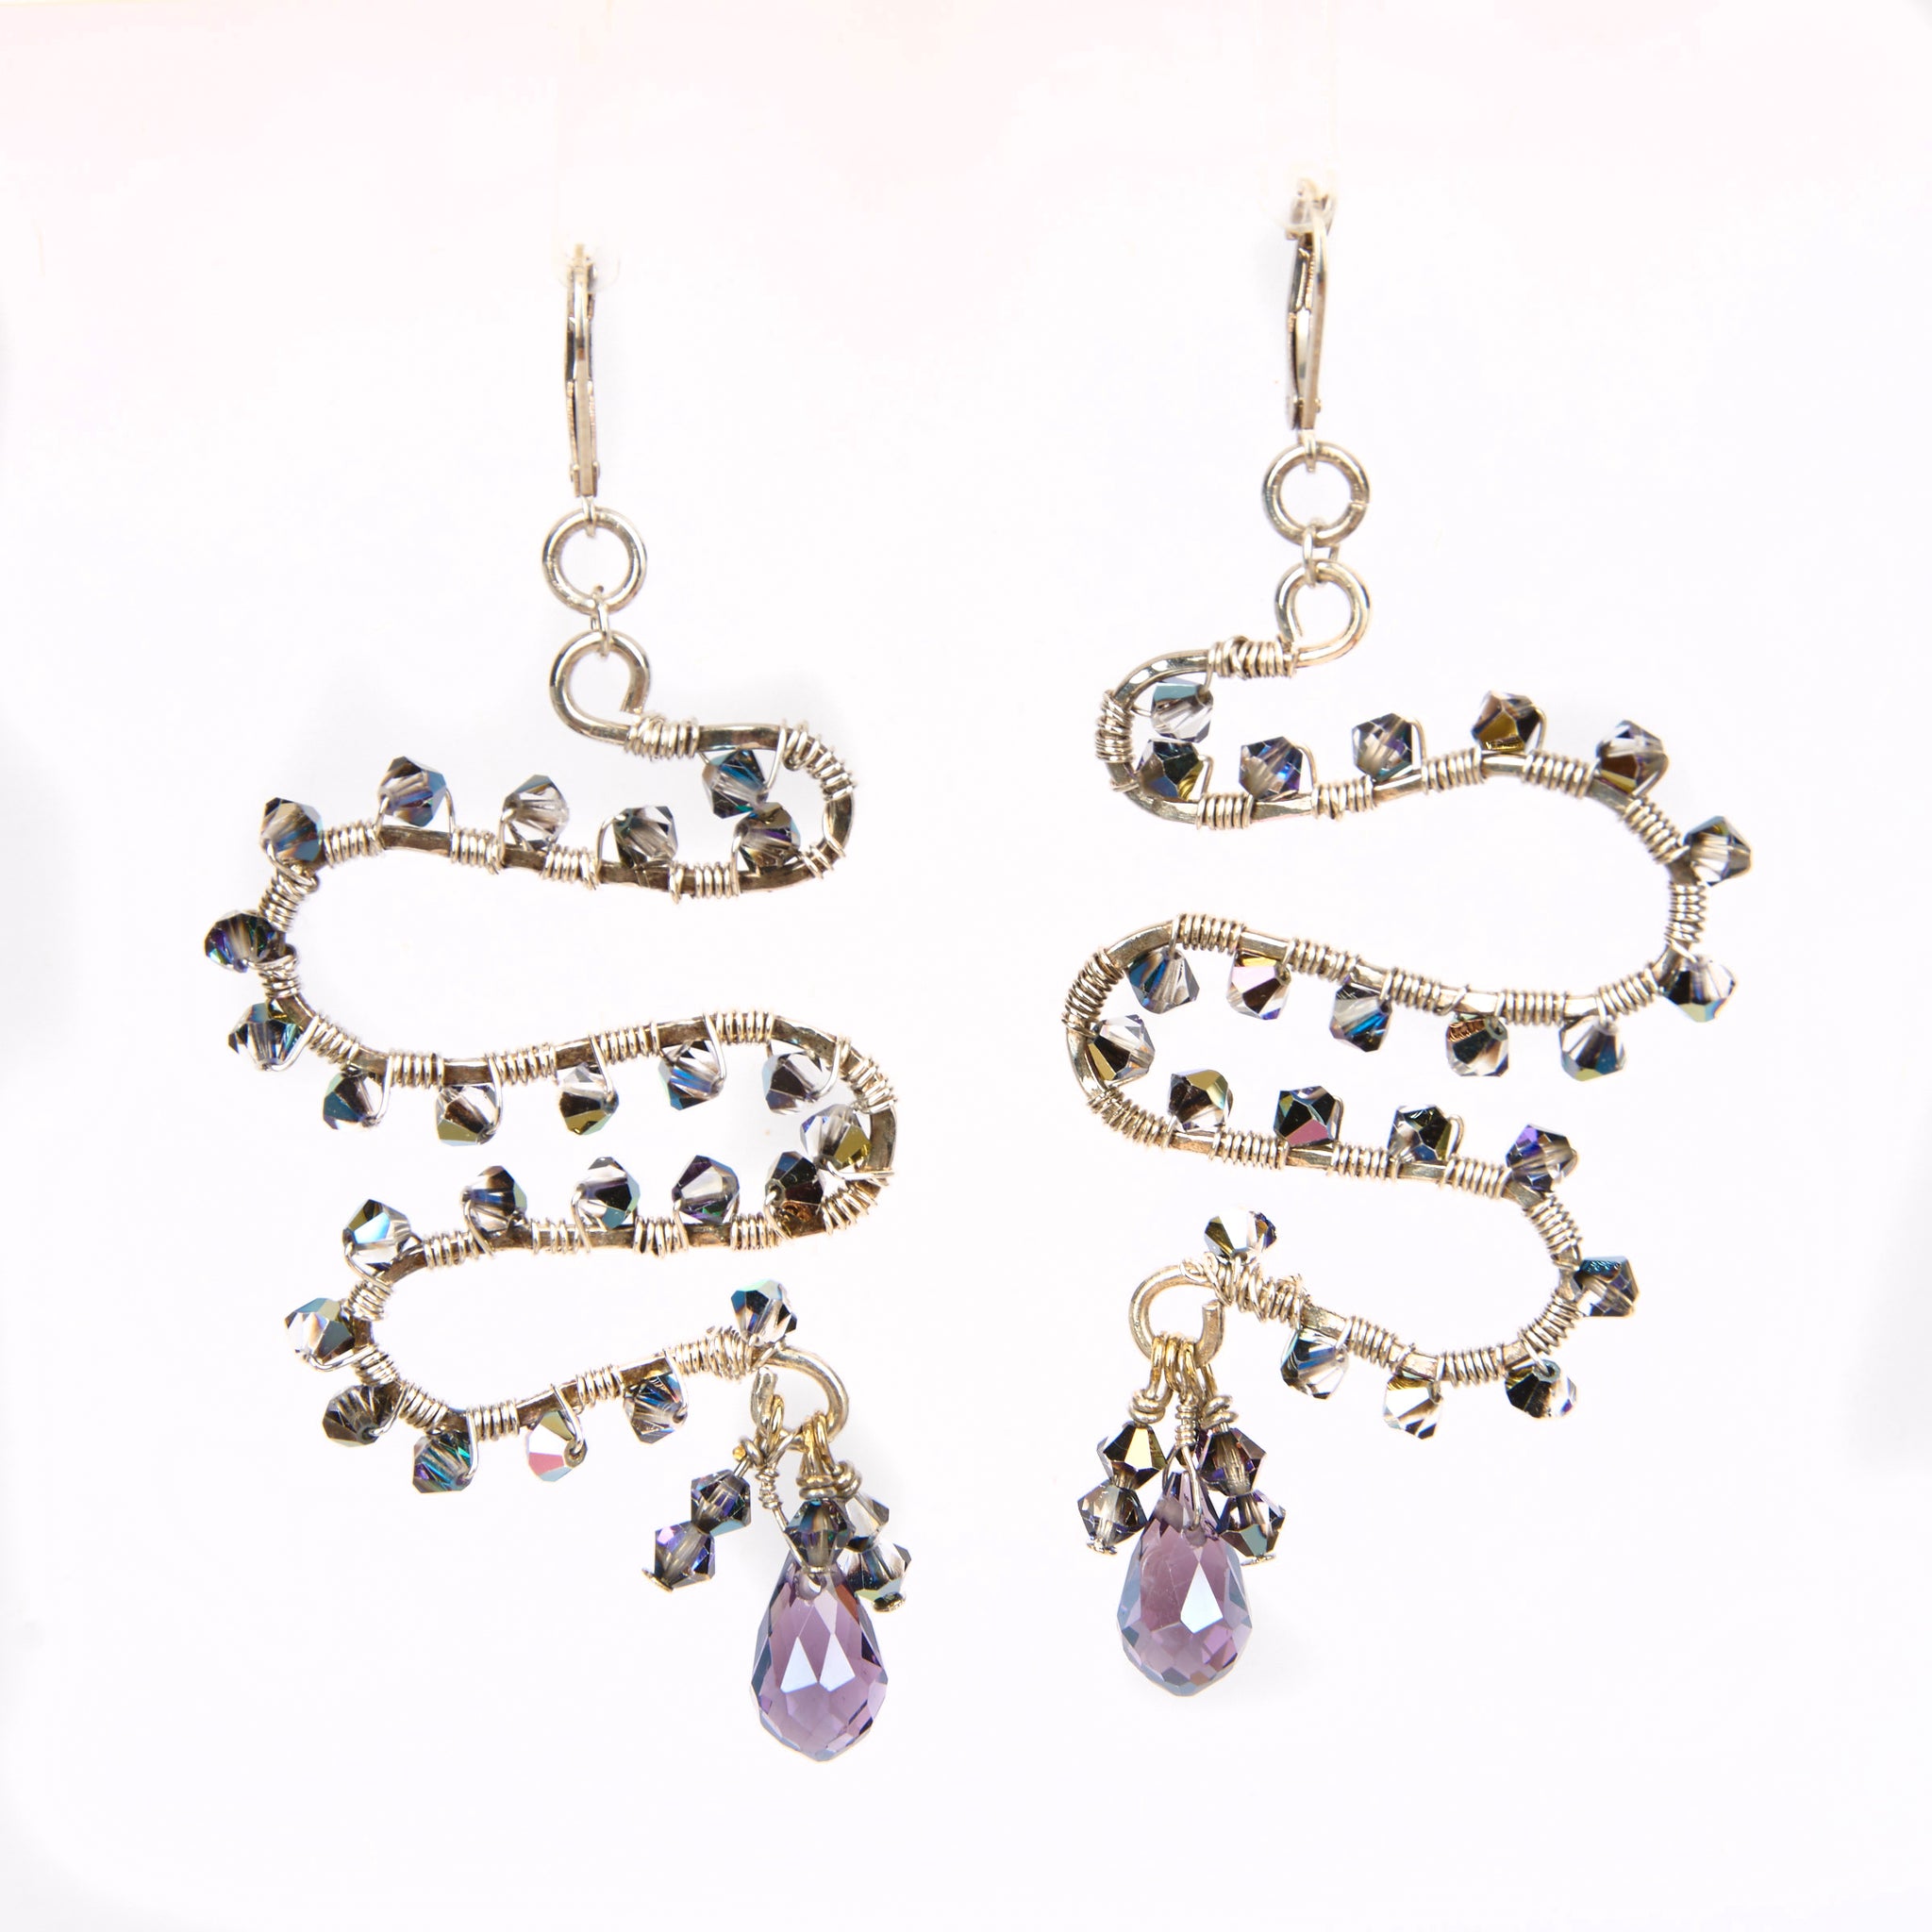 Sterling silver and Swarovski crystal earrings